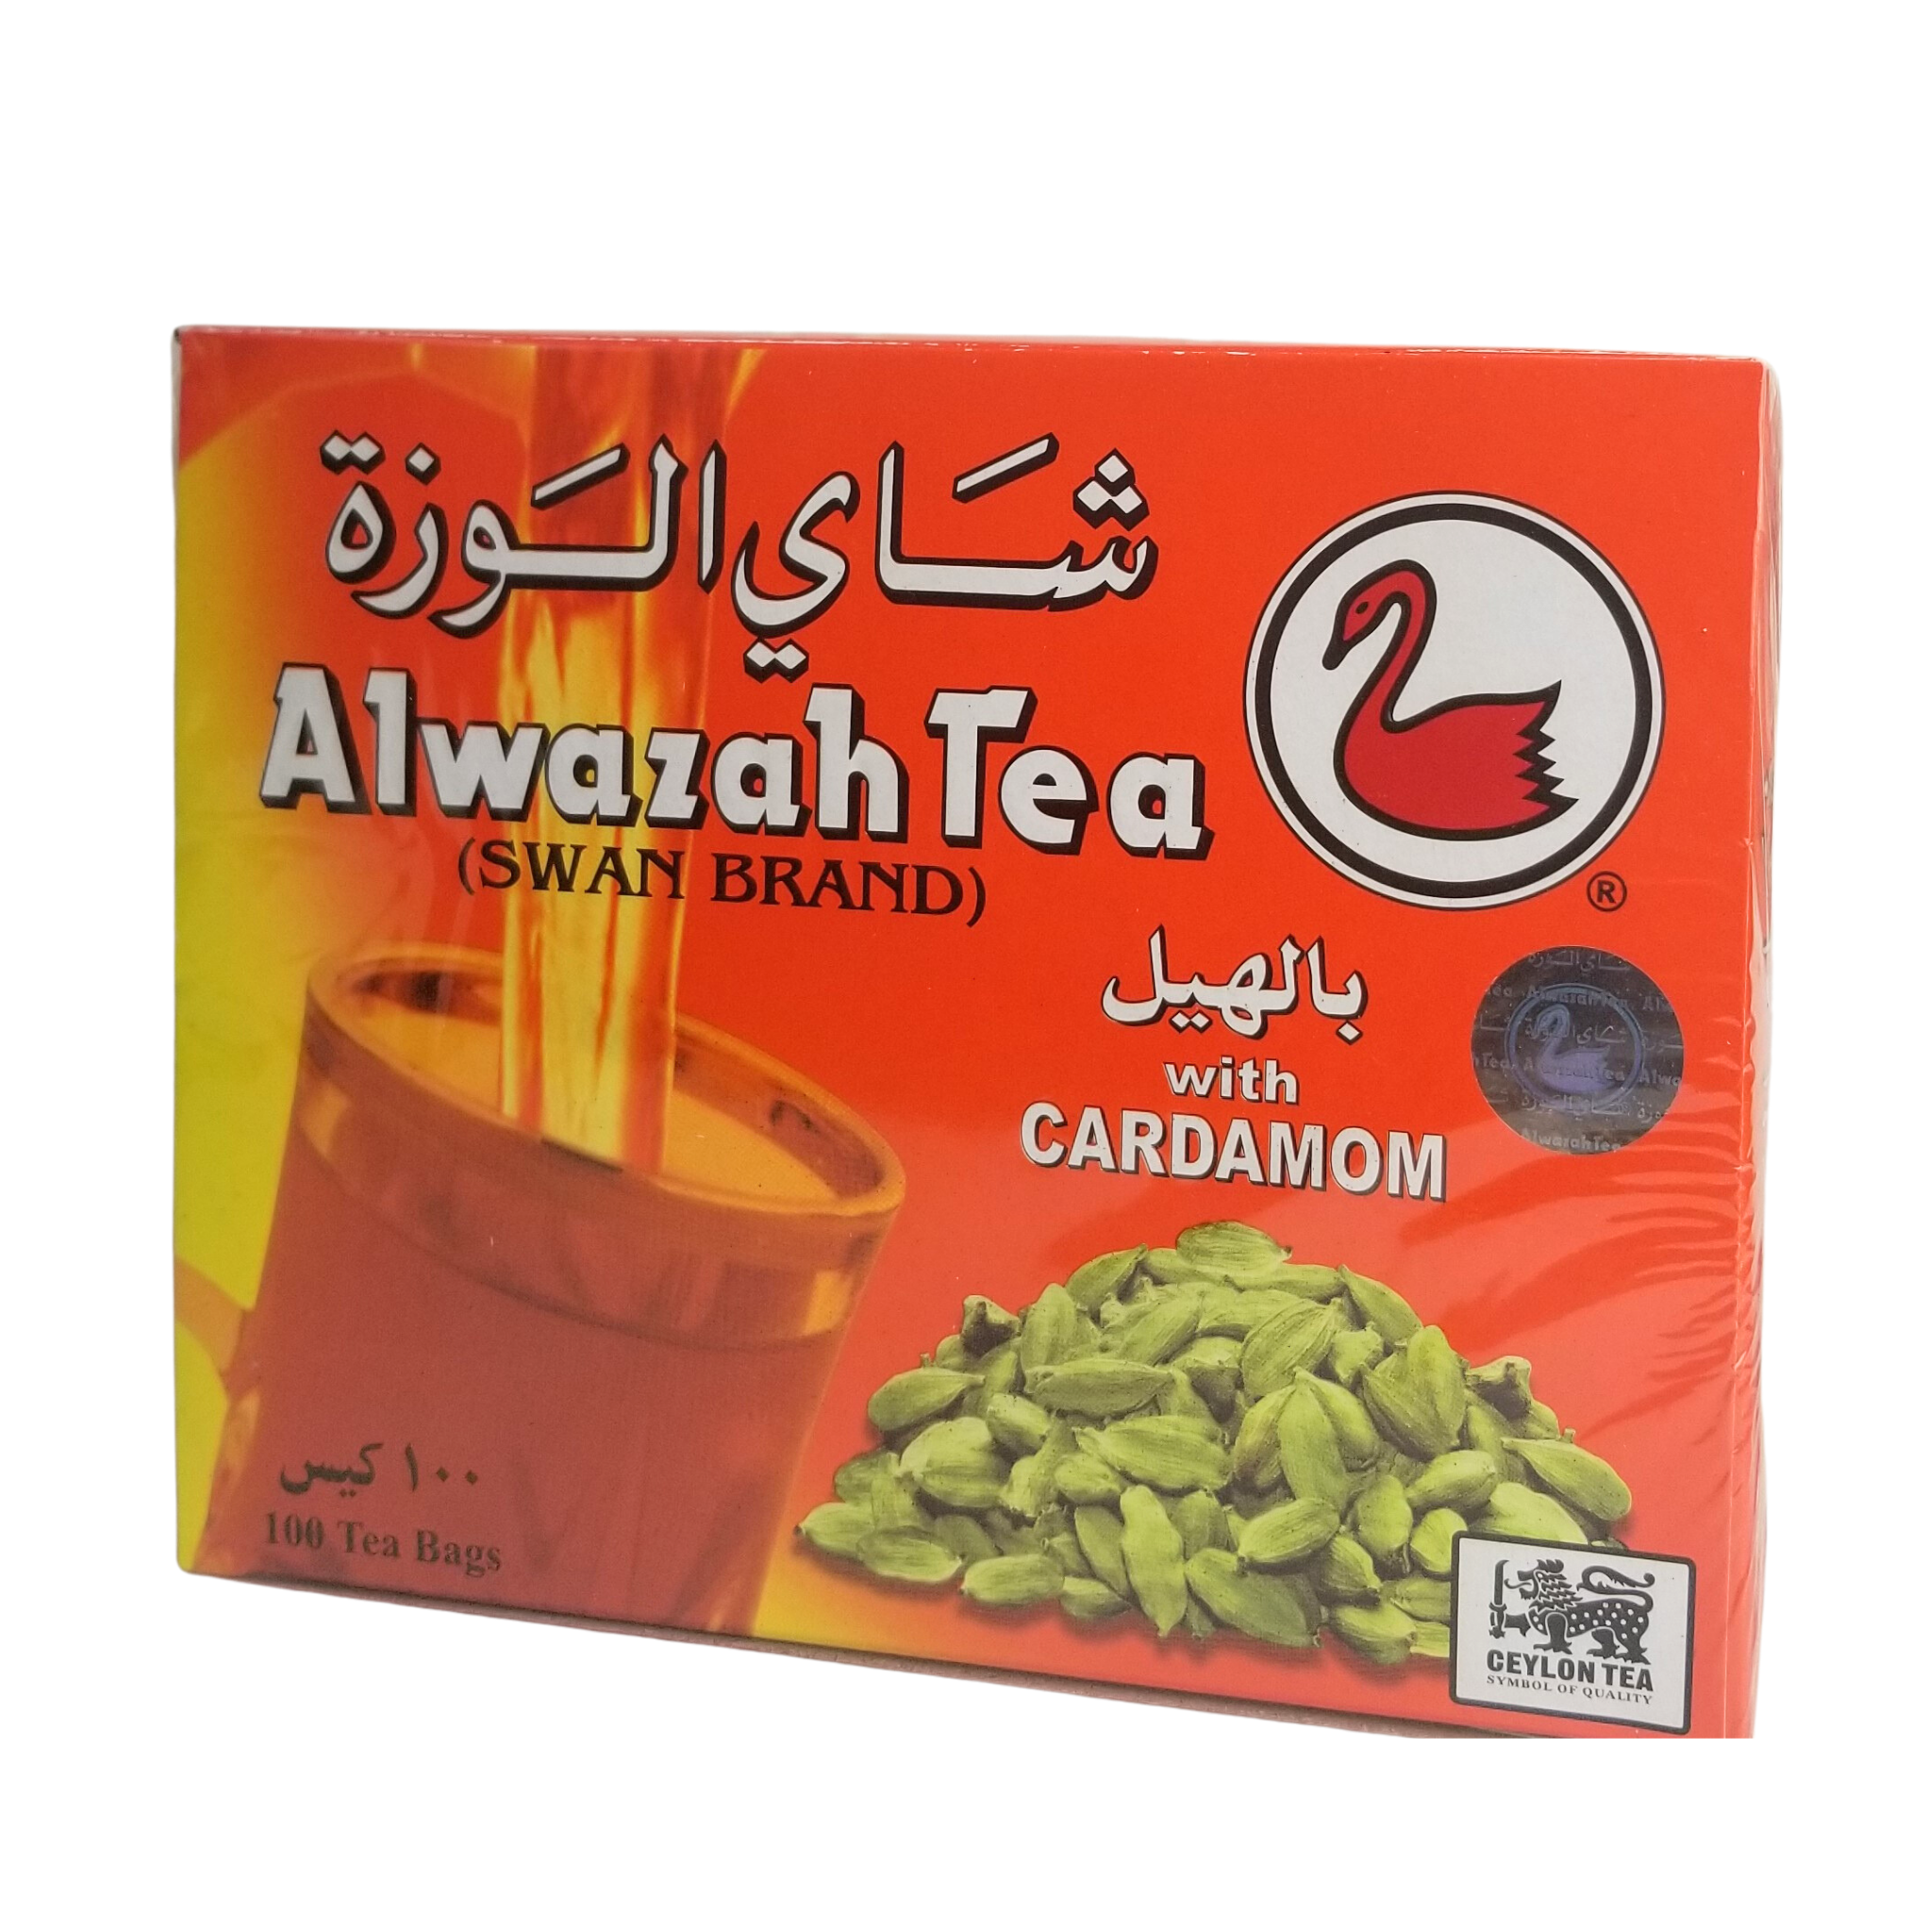 Alwazah Tea (Swan Brand) with Cardamom Quality 100 bags